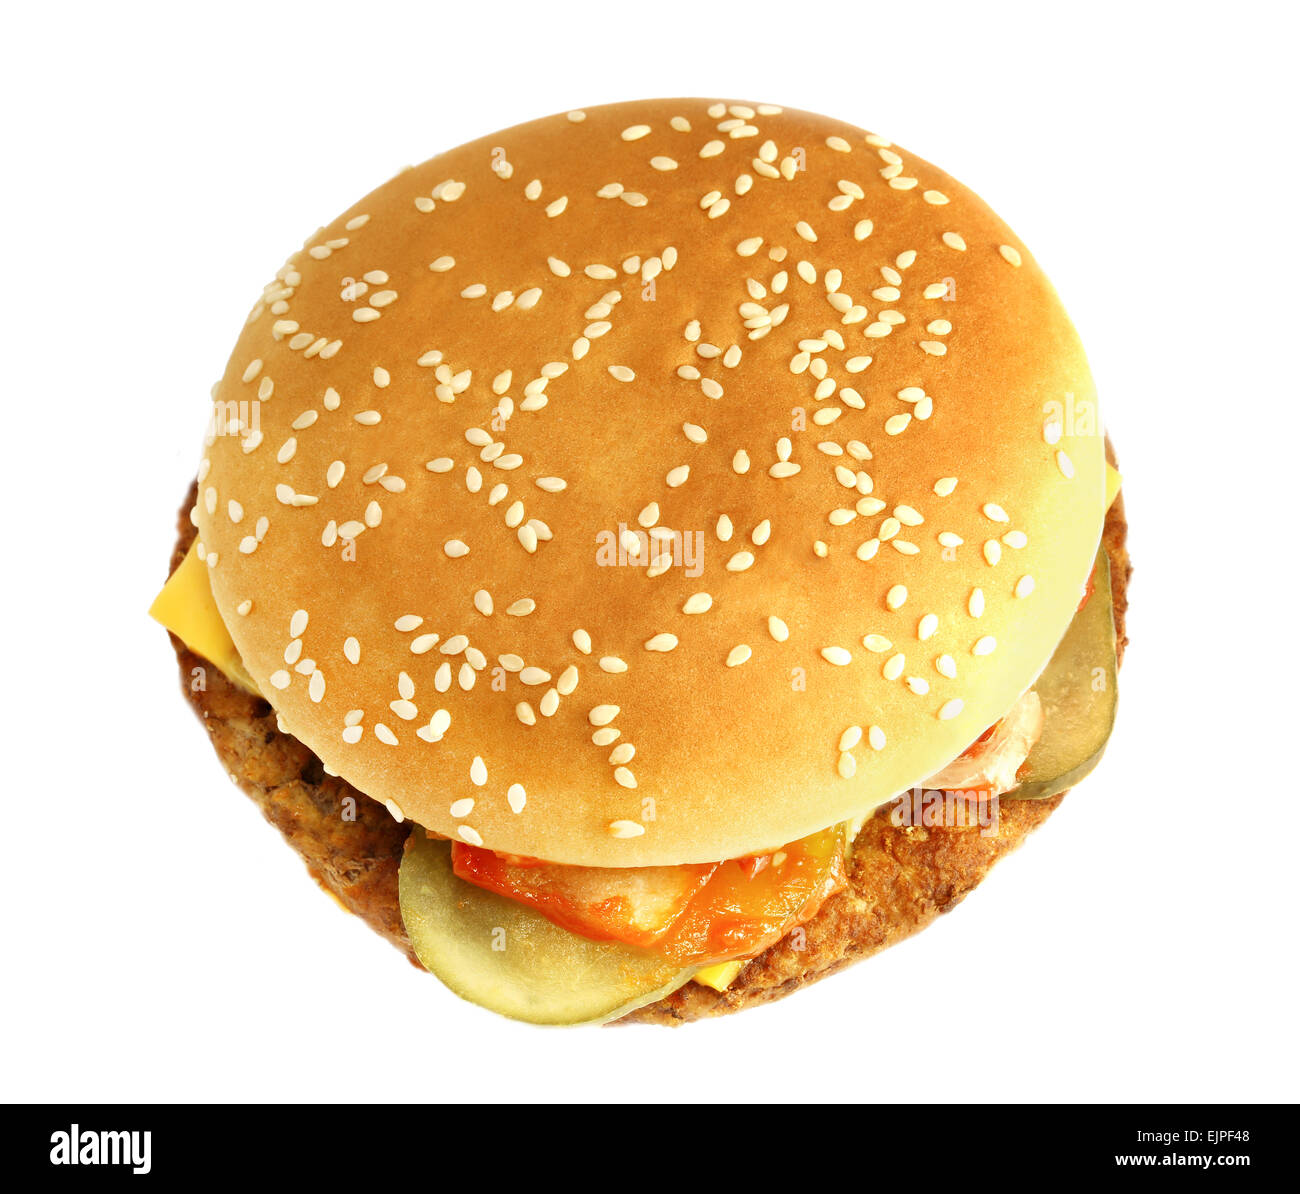 big tasty fresh burger on a white background Stock Photo